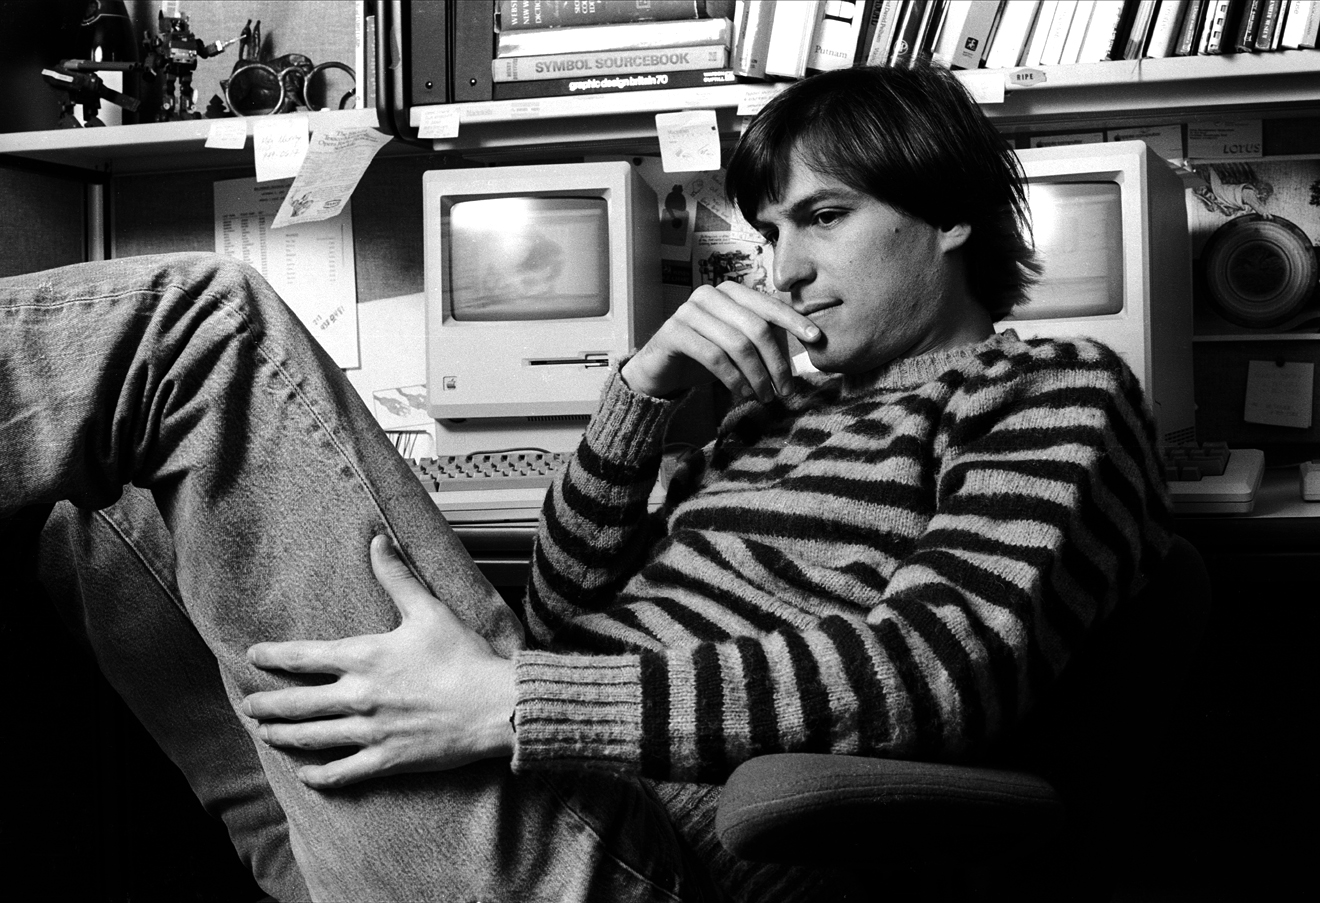 Steve Jobs bem jovem, por Norman Seeff